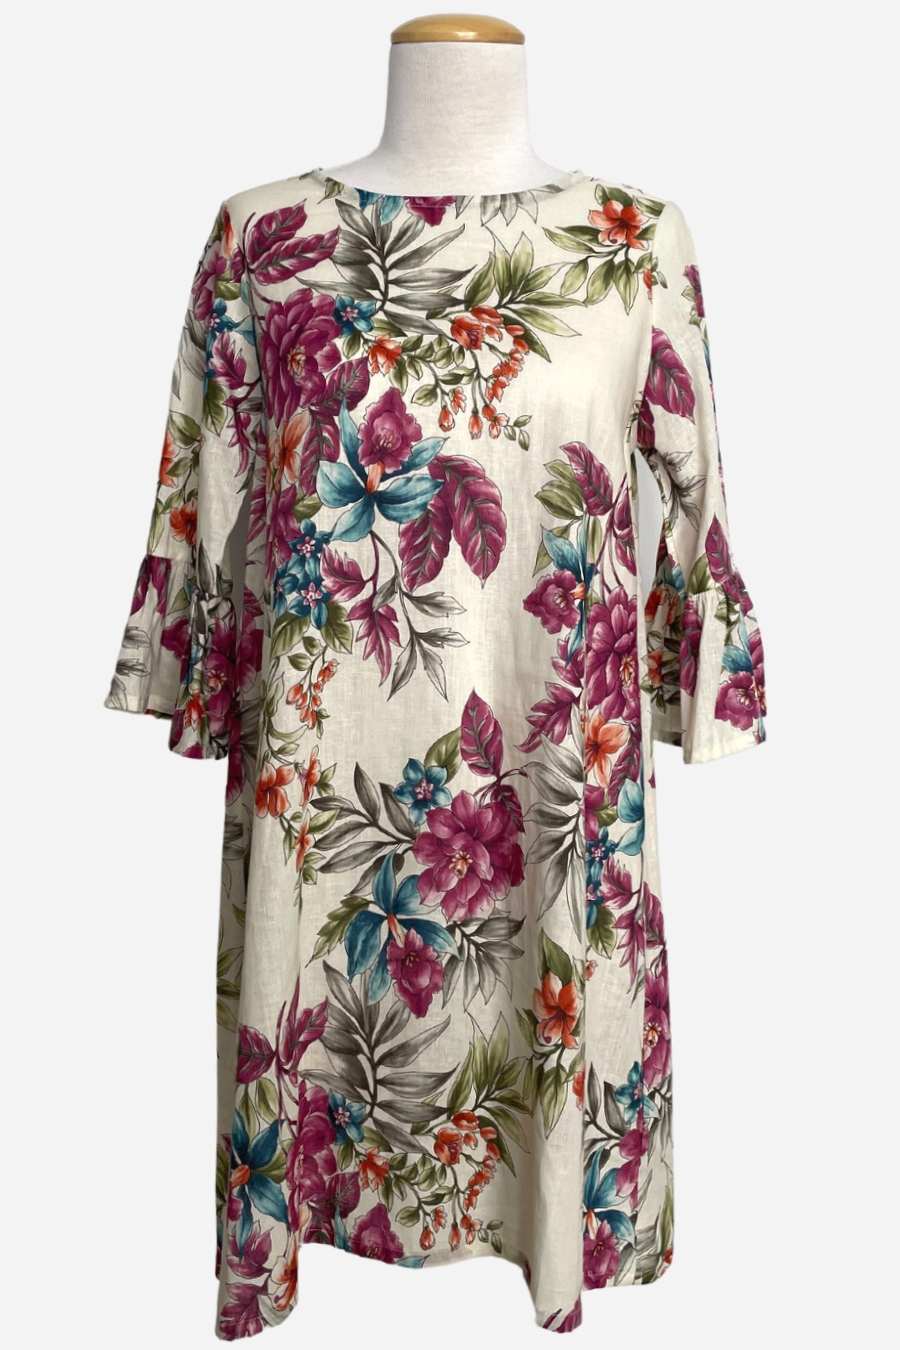 Phryne Dress/Tunic in Verbania Print Linen Blend